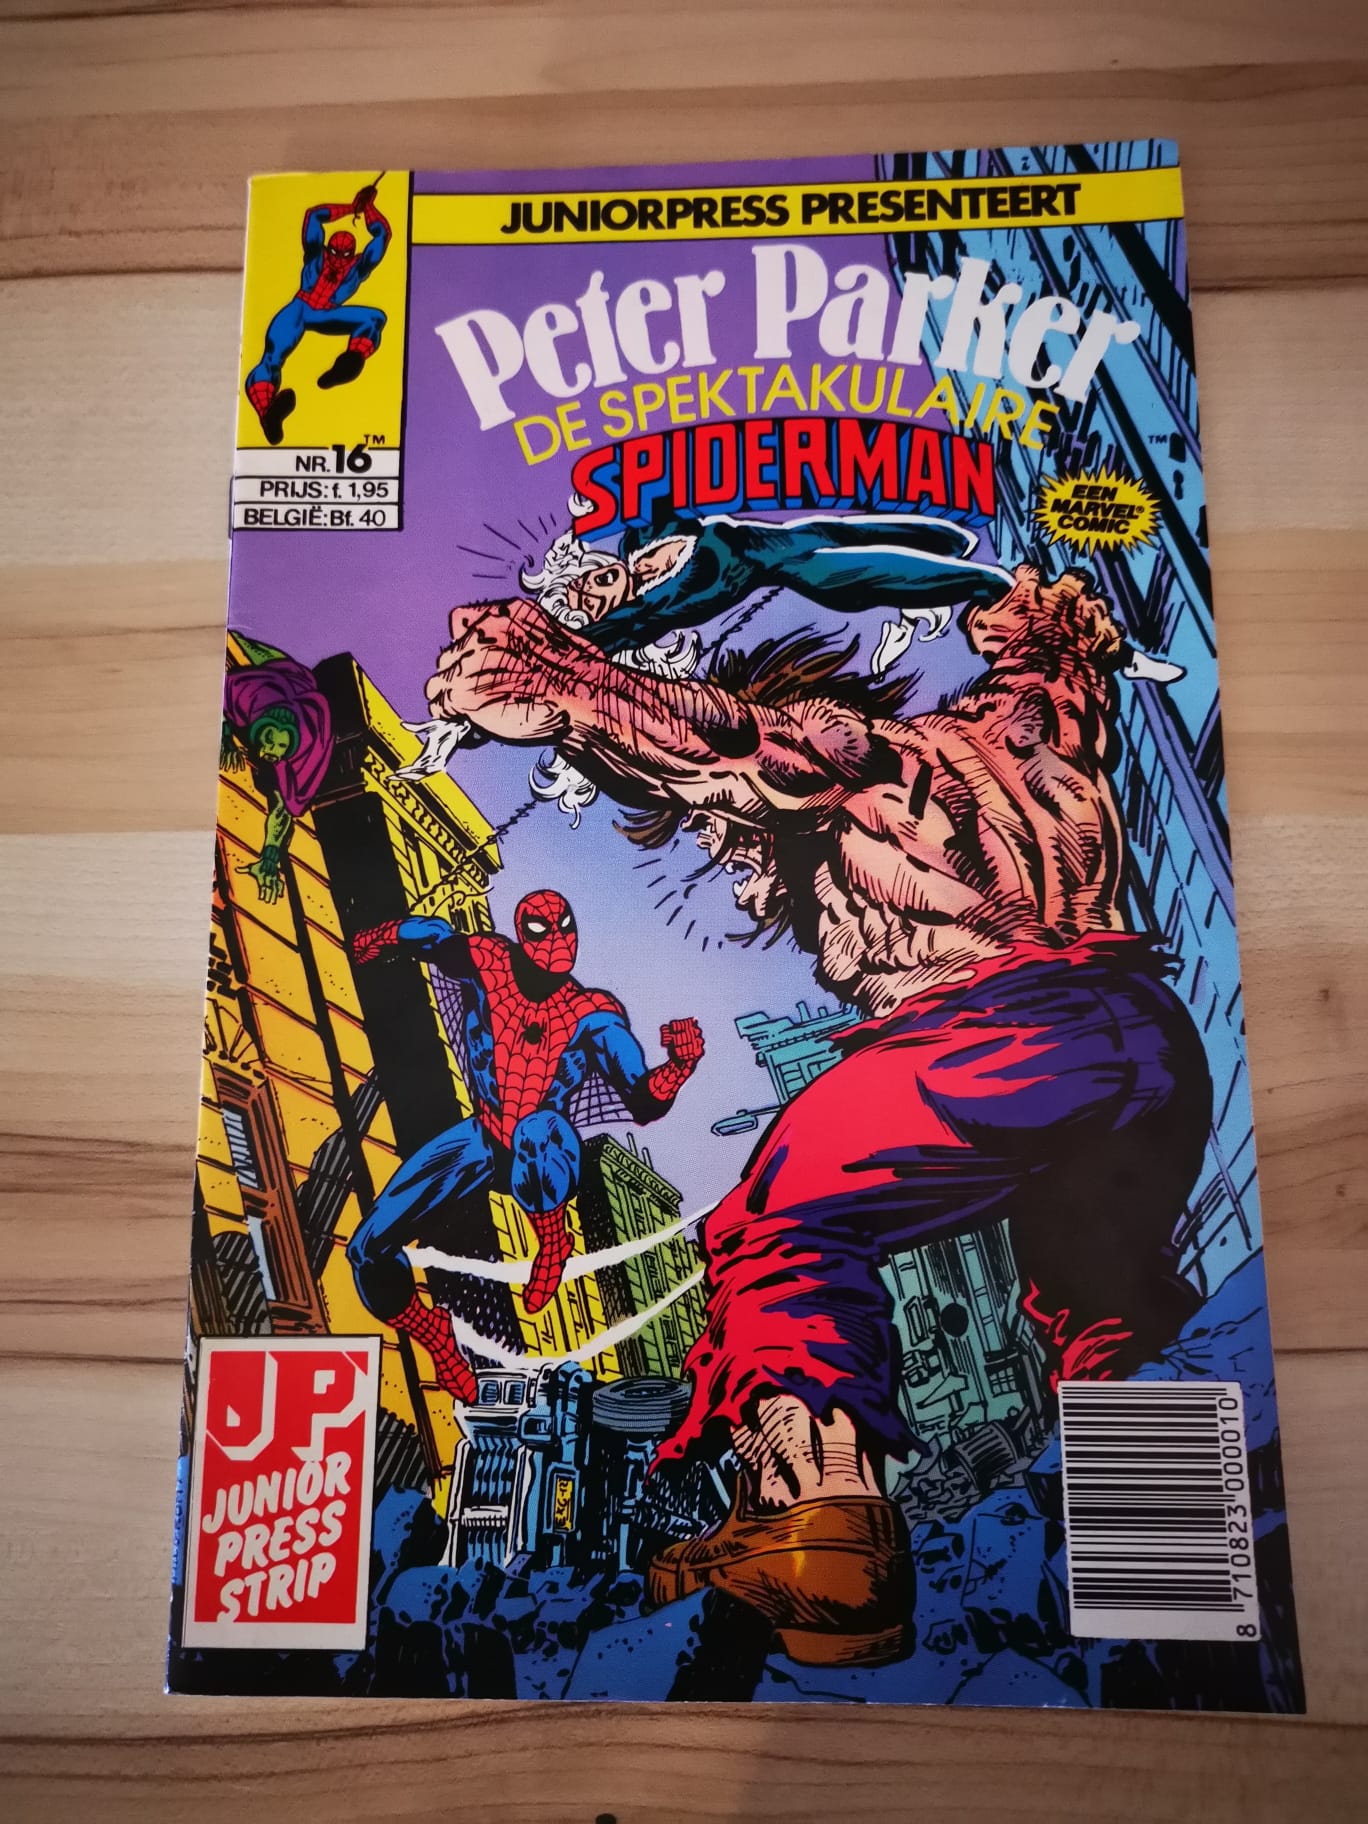 Peter Parker De spektakulaire spiderman #16